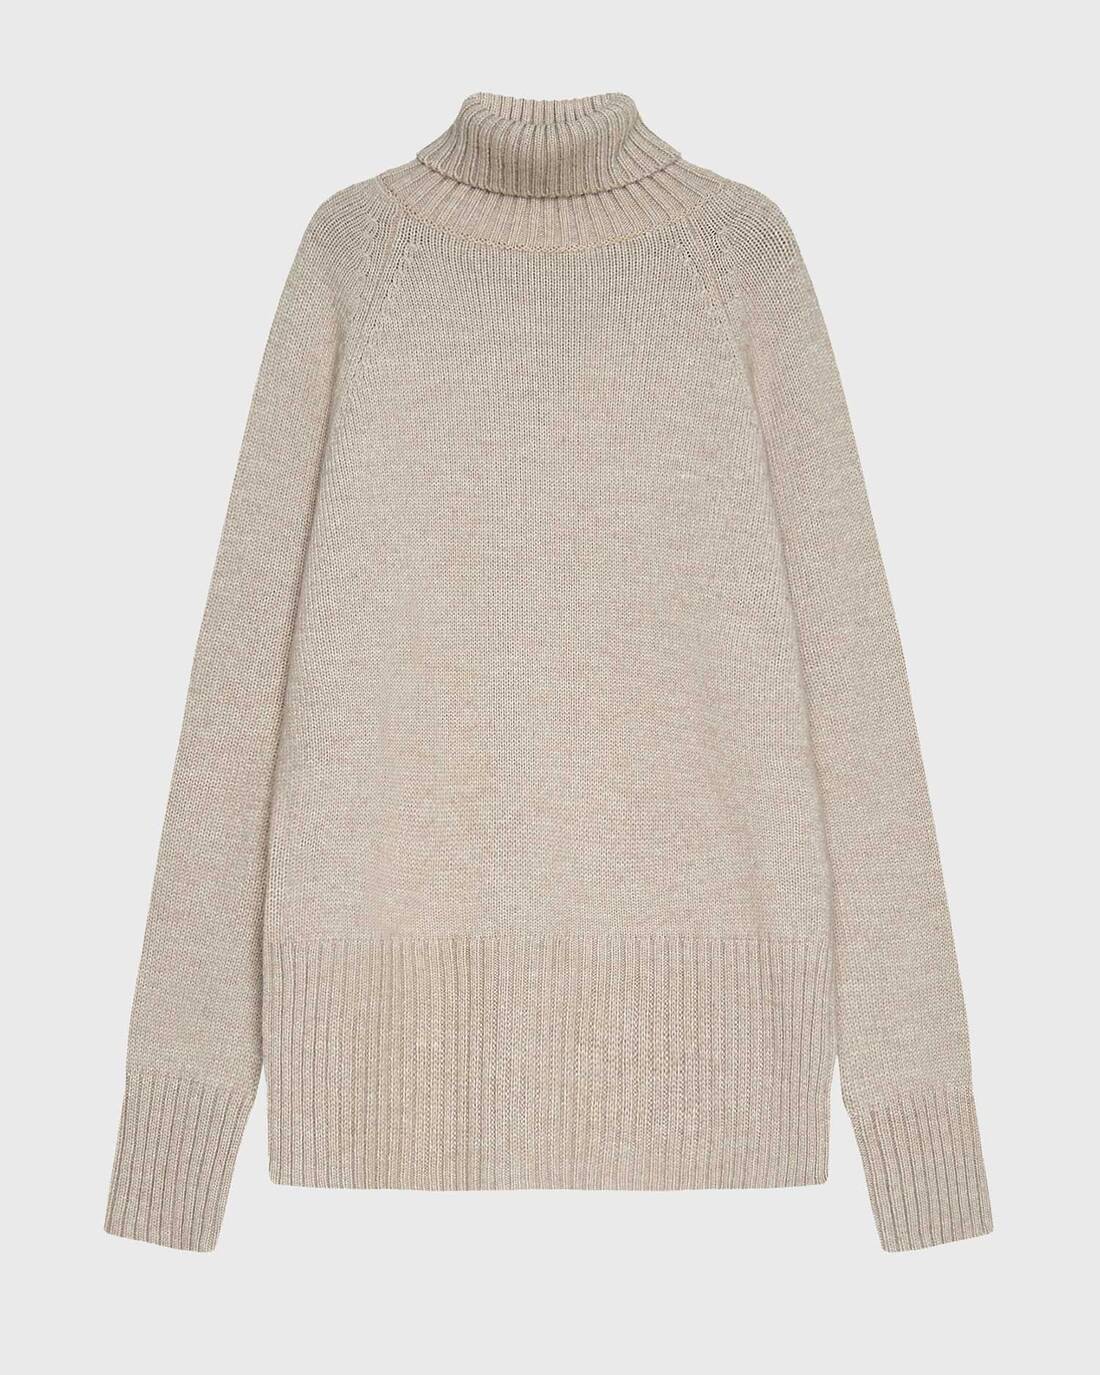 Oversize sweater